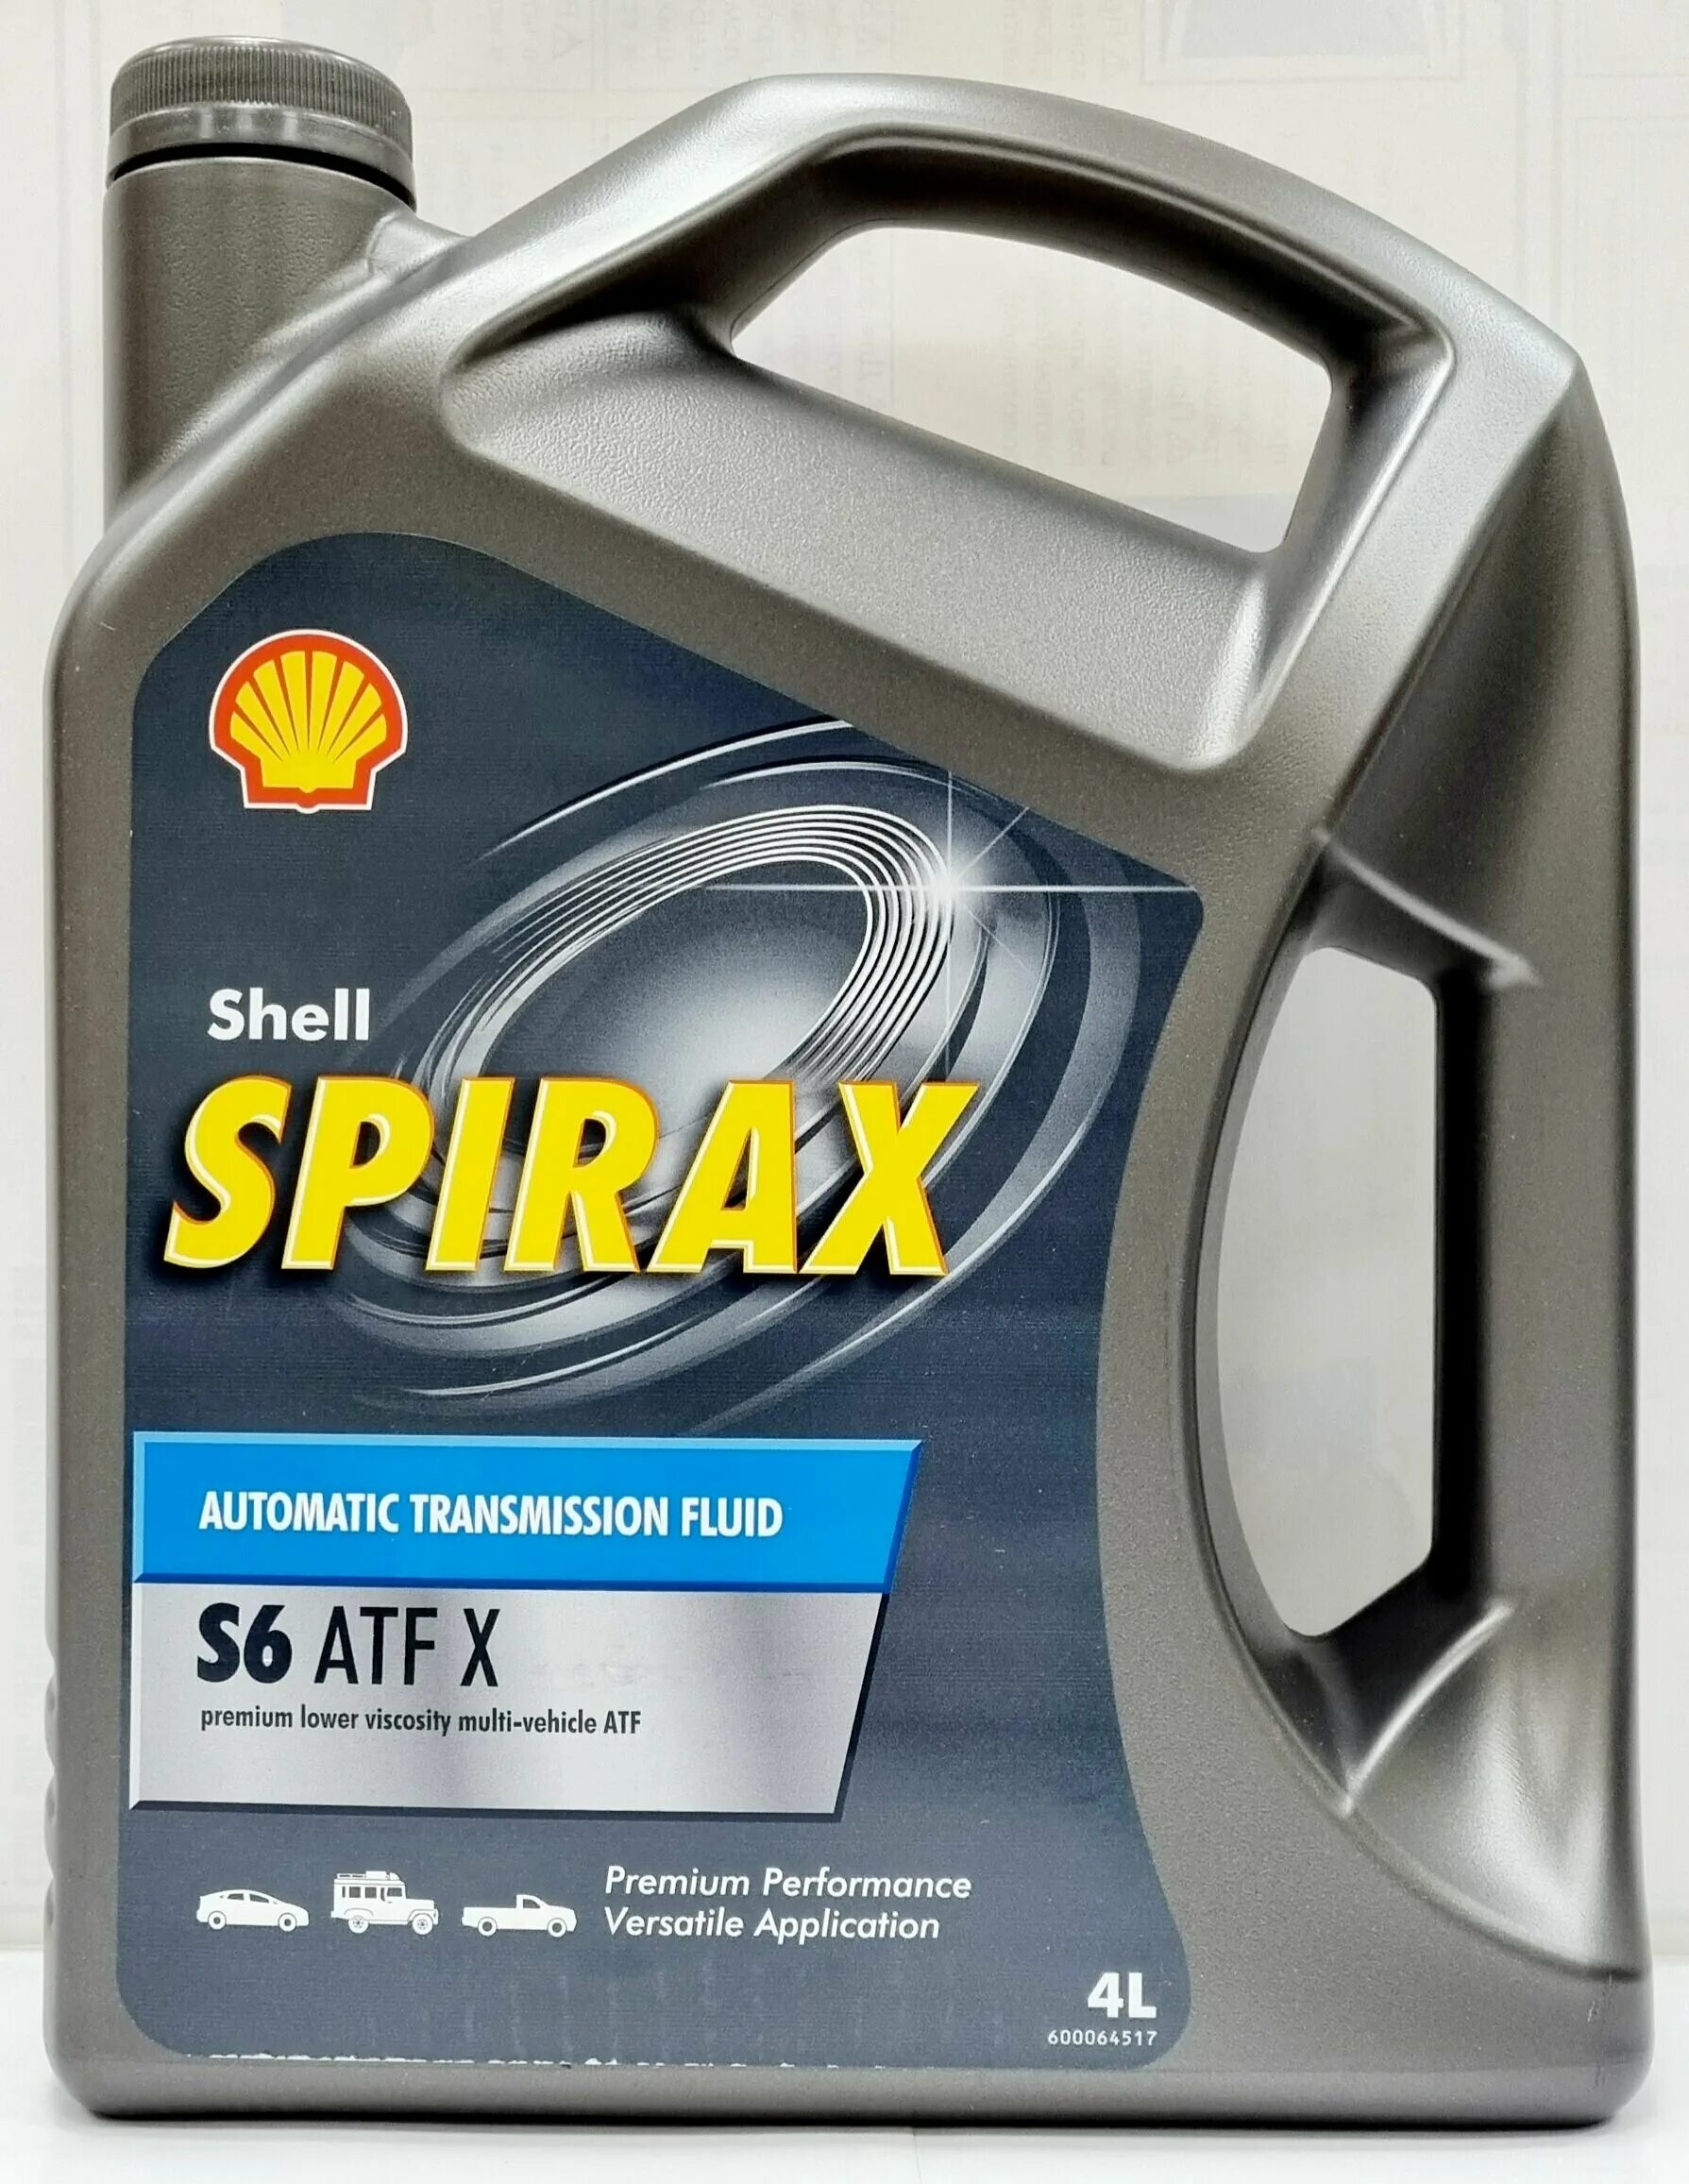 Spirax s6 atf x. Shell Spirax s6 ATF. Shell Spirax s6 ATF X 4л. S6 ATF X Shell. Масло трансмиссионное Shell Spirax s6 ATF X артикул.